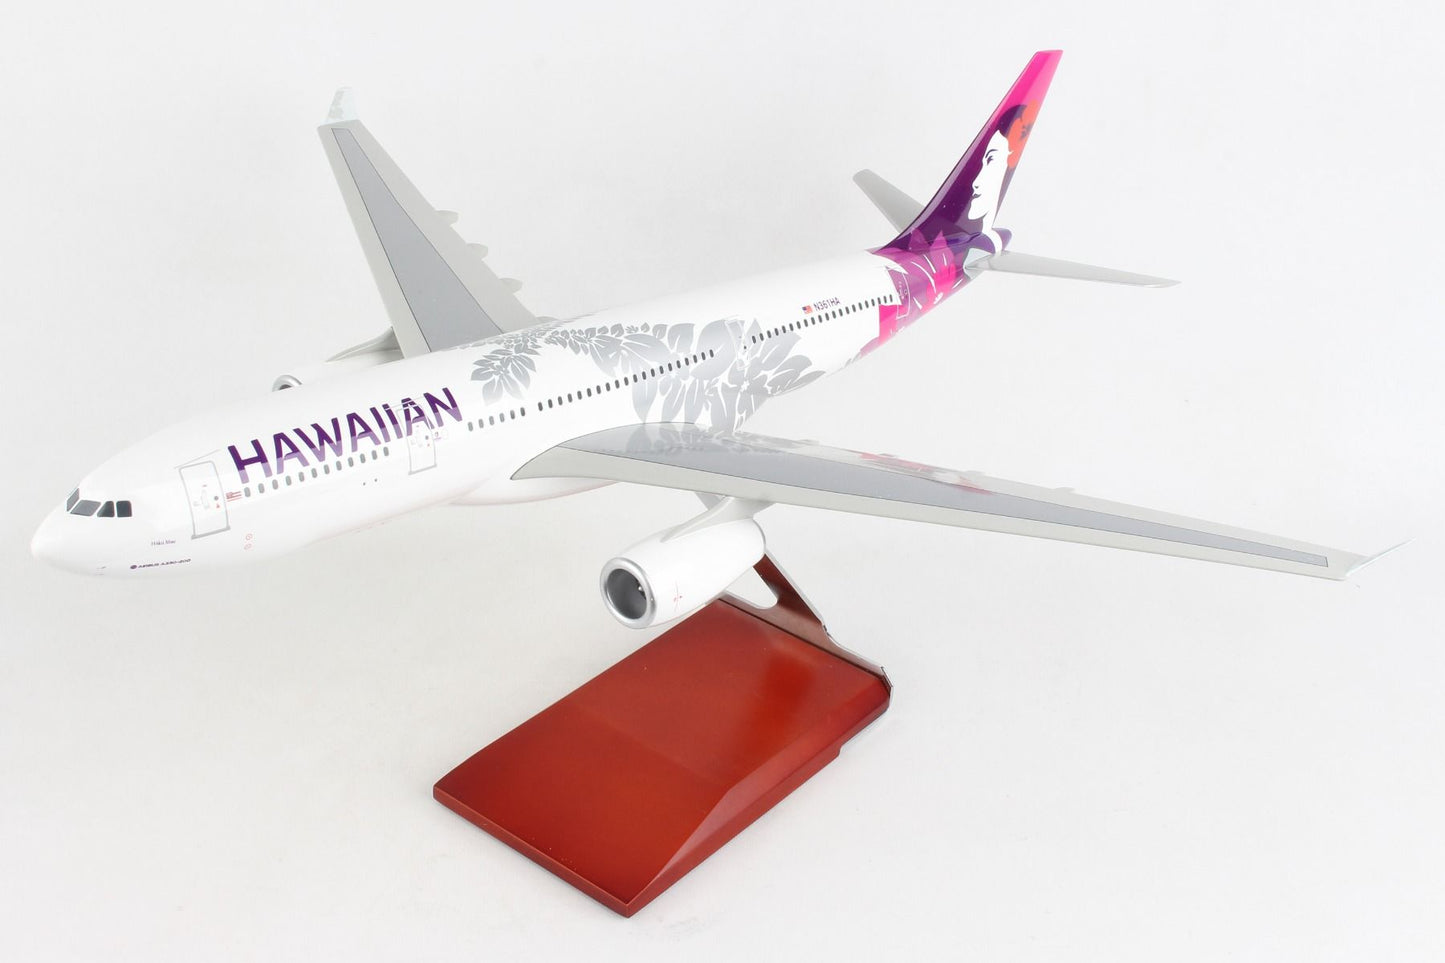 SKYMARKS HAWAIIAN A330-200 1/100 W/WOOD STAND & GEAR